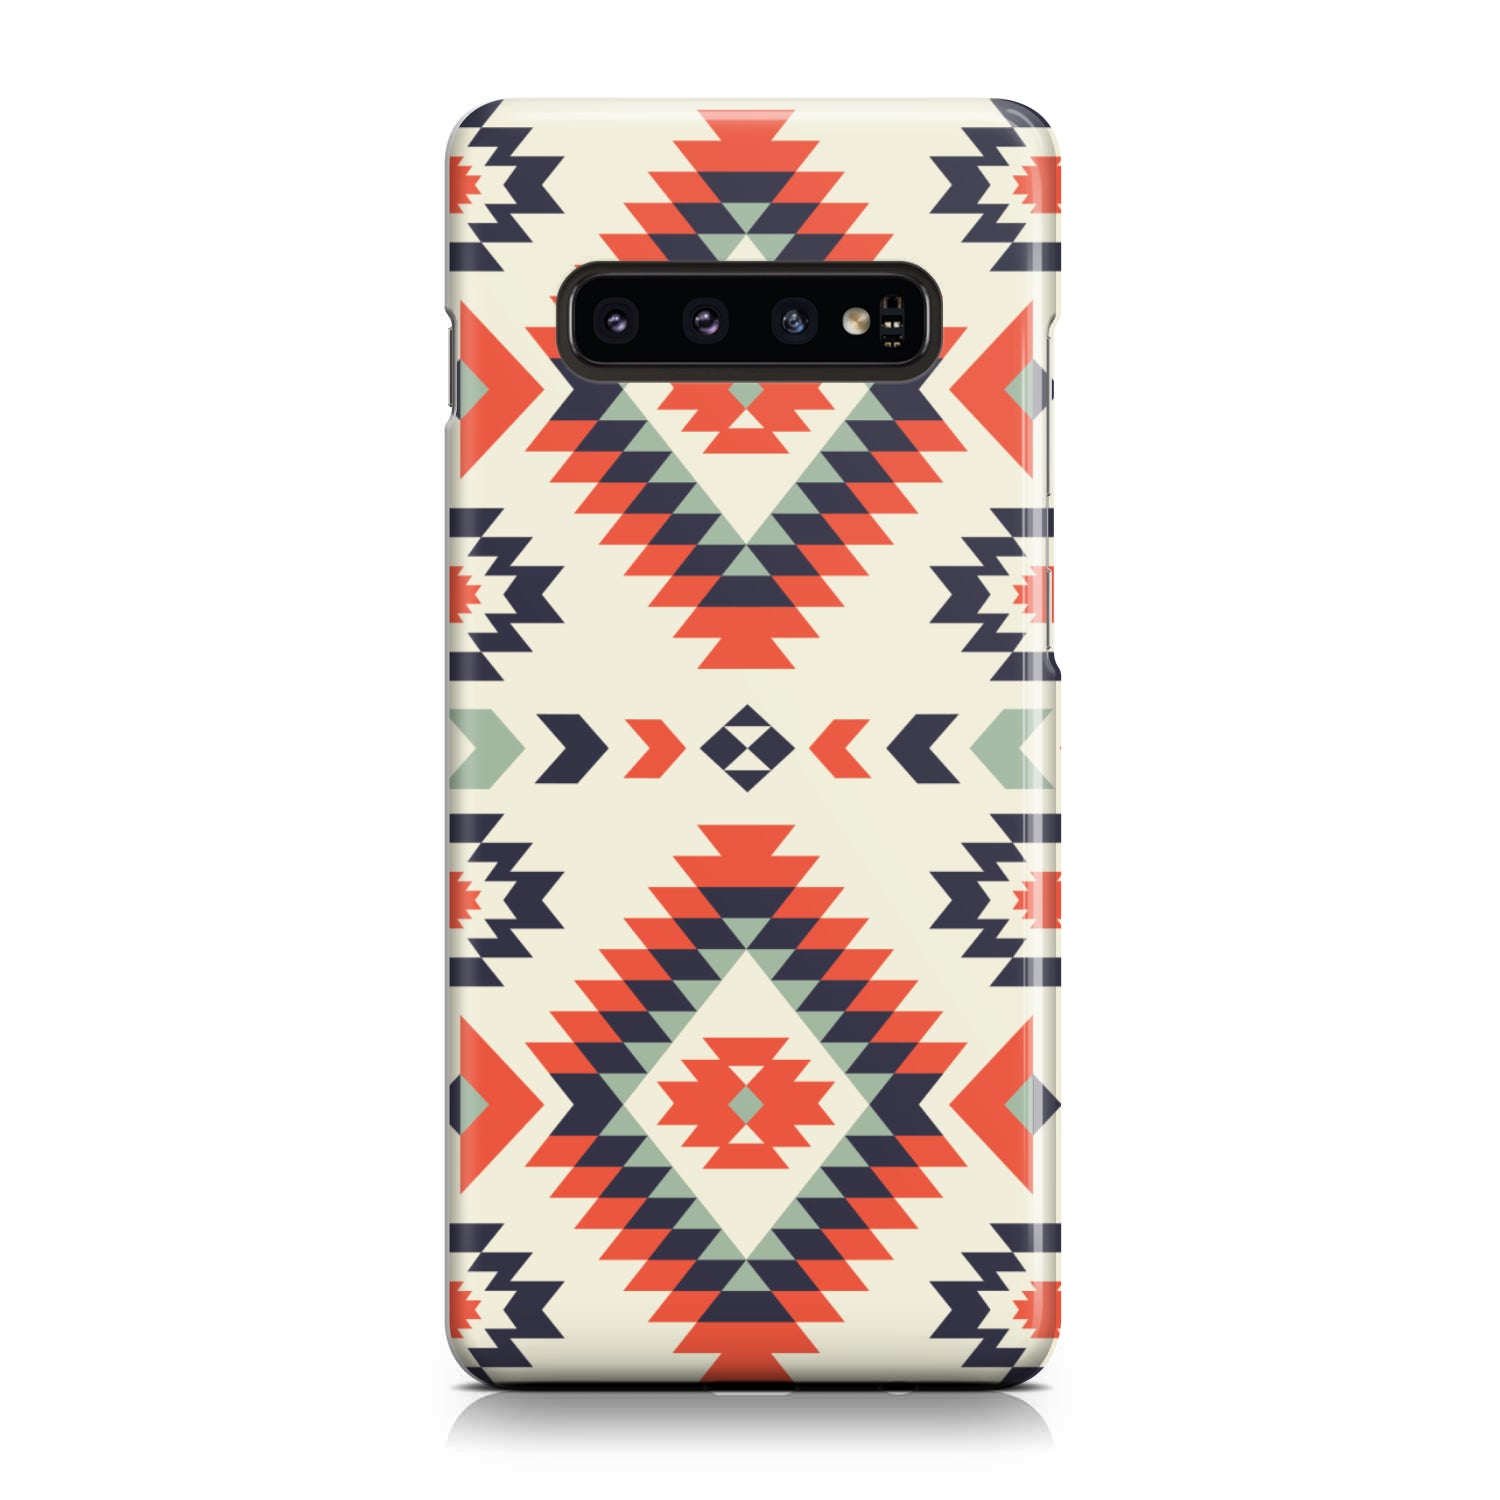 Powwow Store gb nat00389 pink geometric pattern phone case